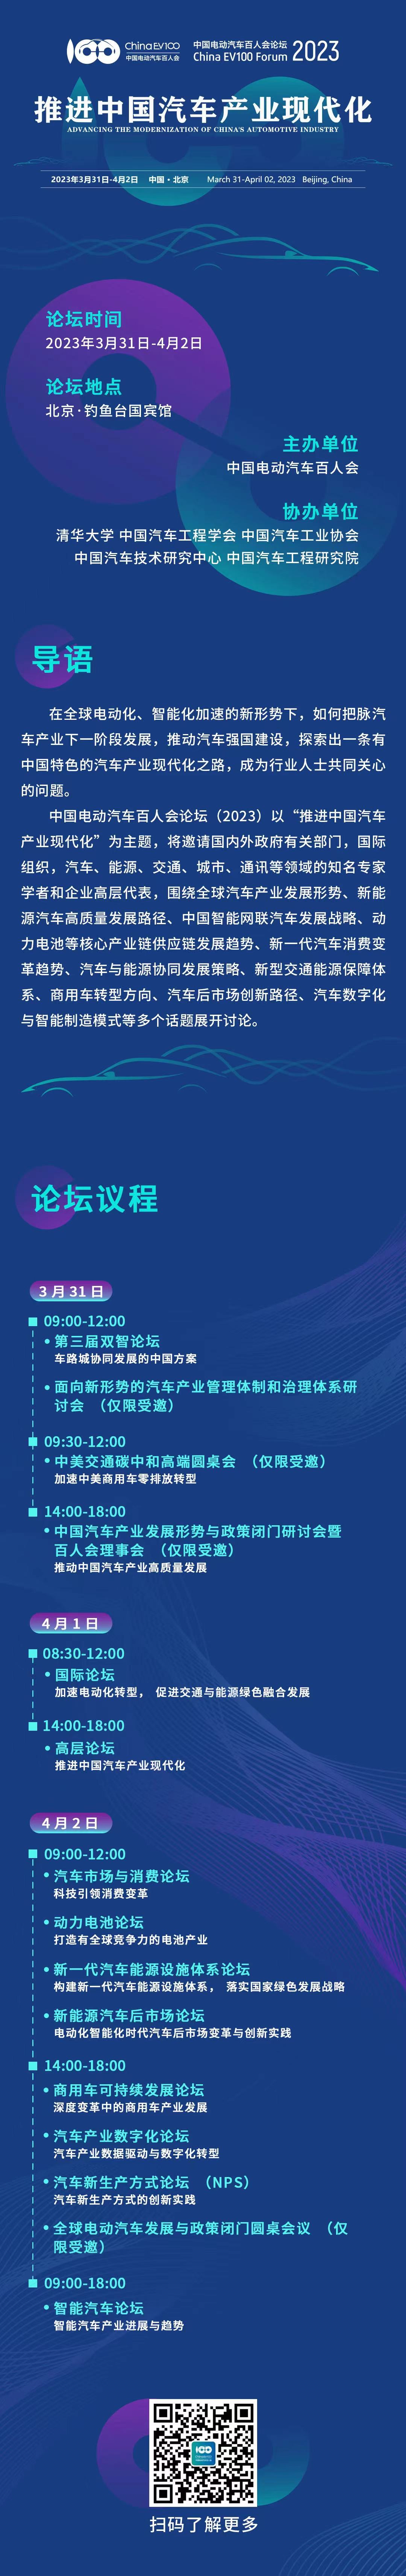 Imagination中国区董事长将出席中国电动汽车百人会论坛2023